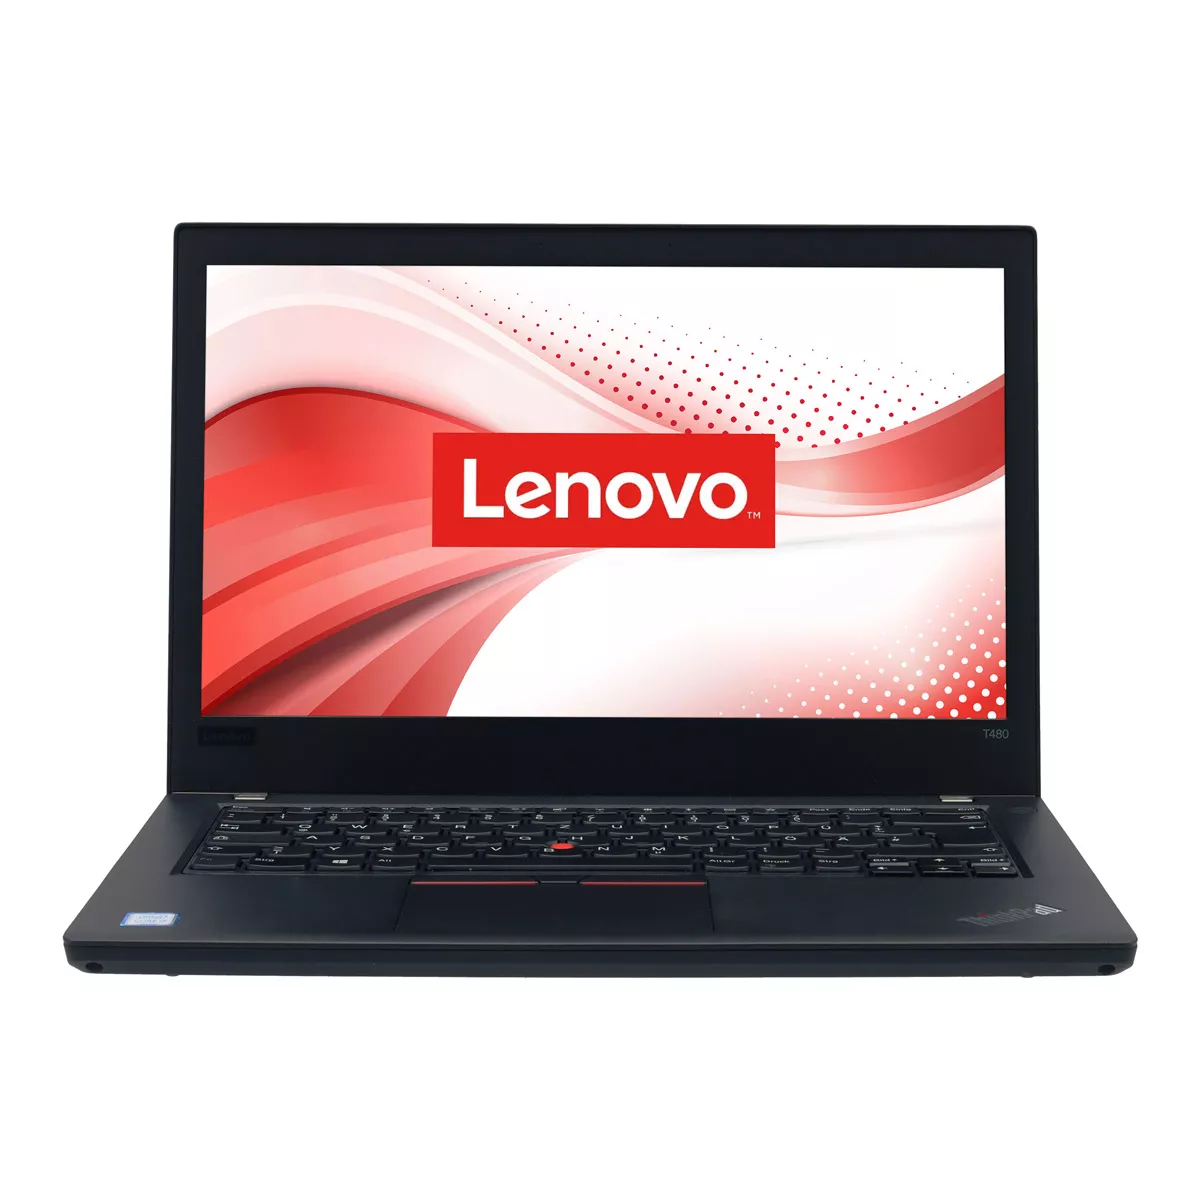 Lenovo ThinkPad T480 Core i5 8350U Full-HD 500 GB M.2 nVME SSD Webcam A